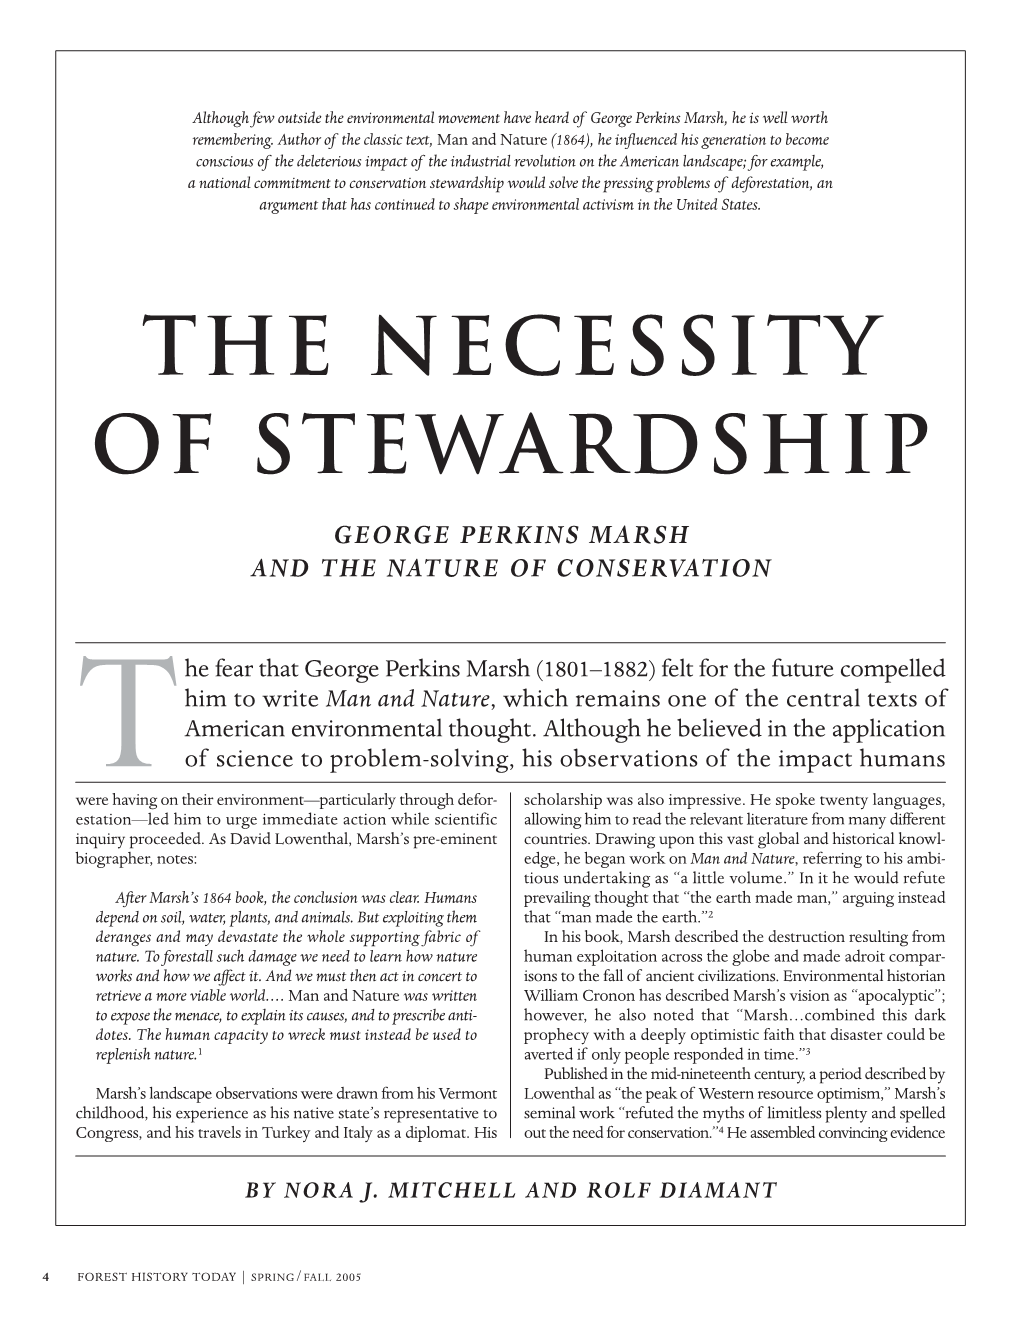 The Necessity of Stewardship